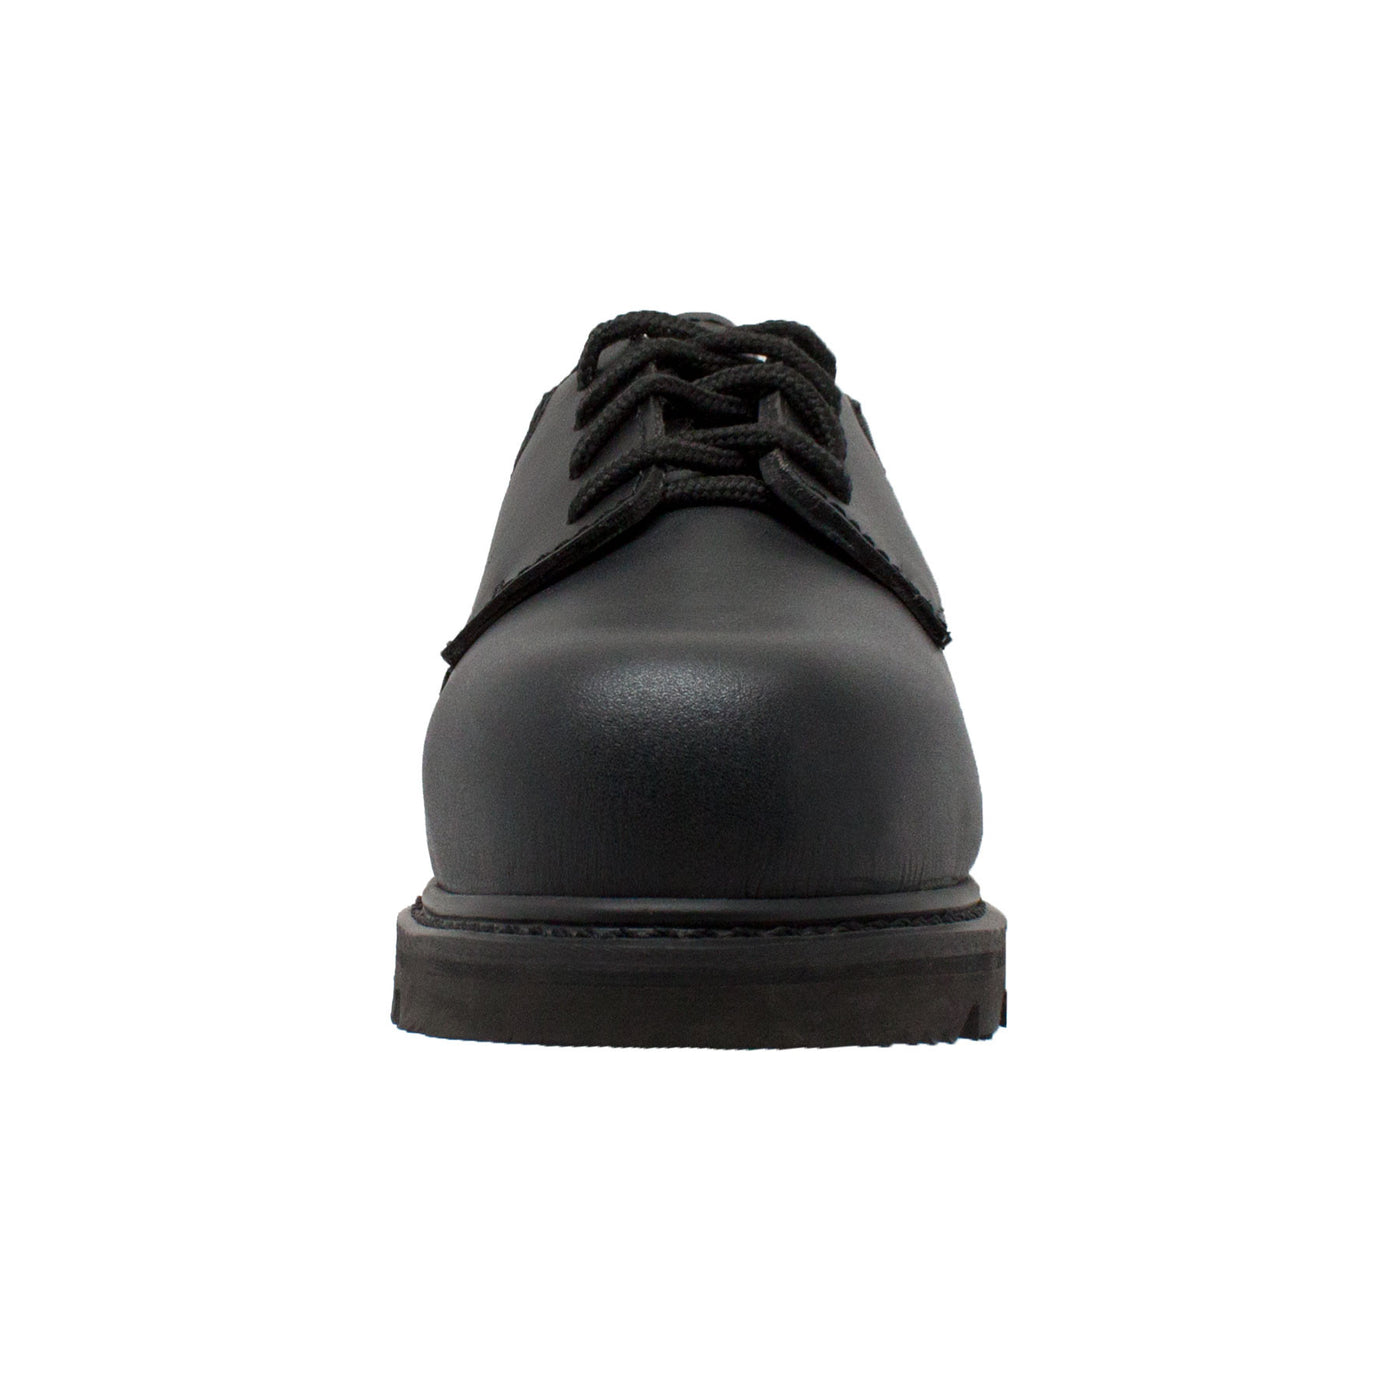 Men's 4" Composite Toe Oxford Boot Black - 1586 - Shop Genuine Leather men & women's boots online | AdTecFootWear